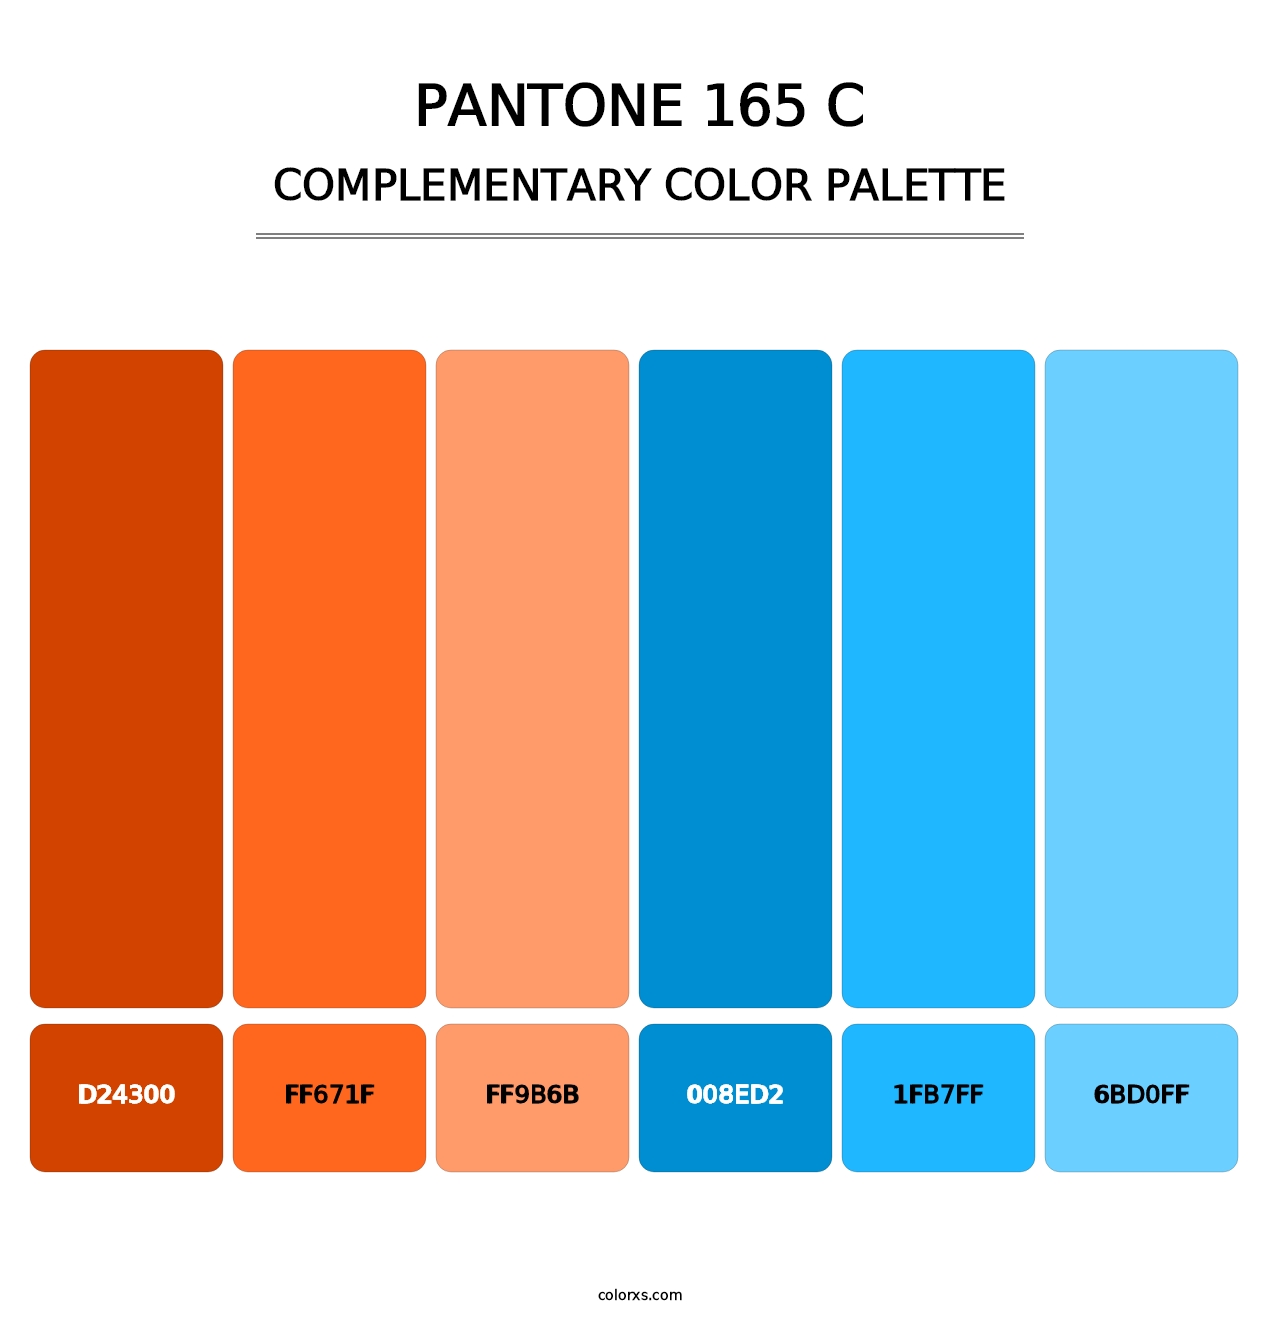 PANTONE 165 C - Complementary Color Palette